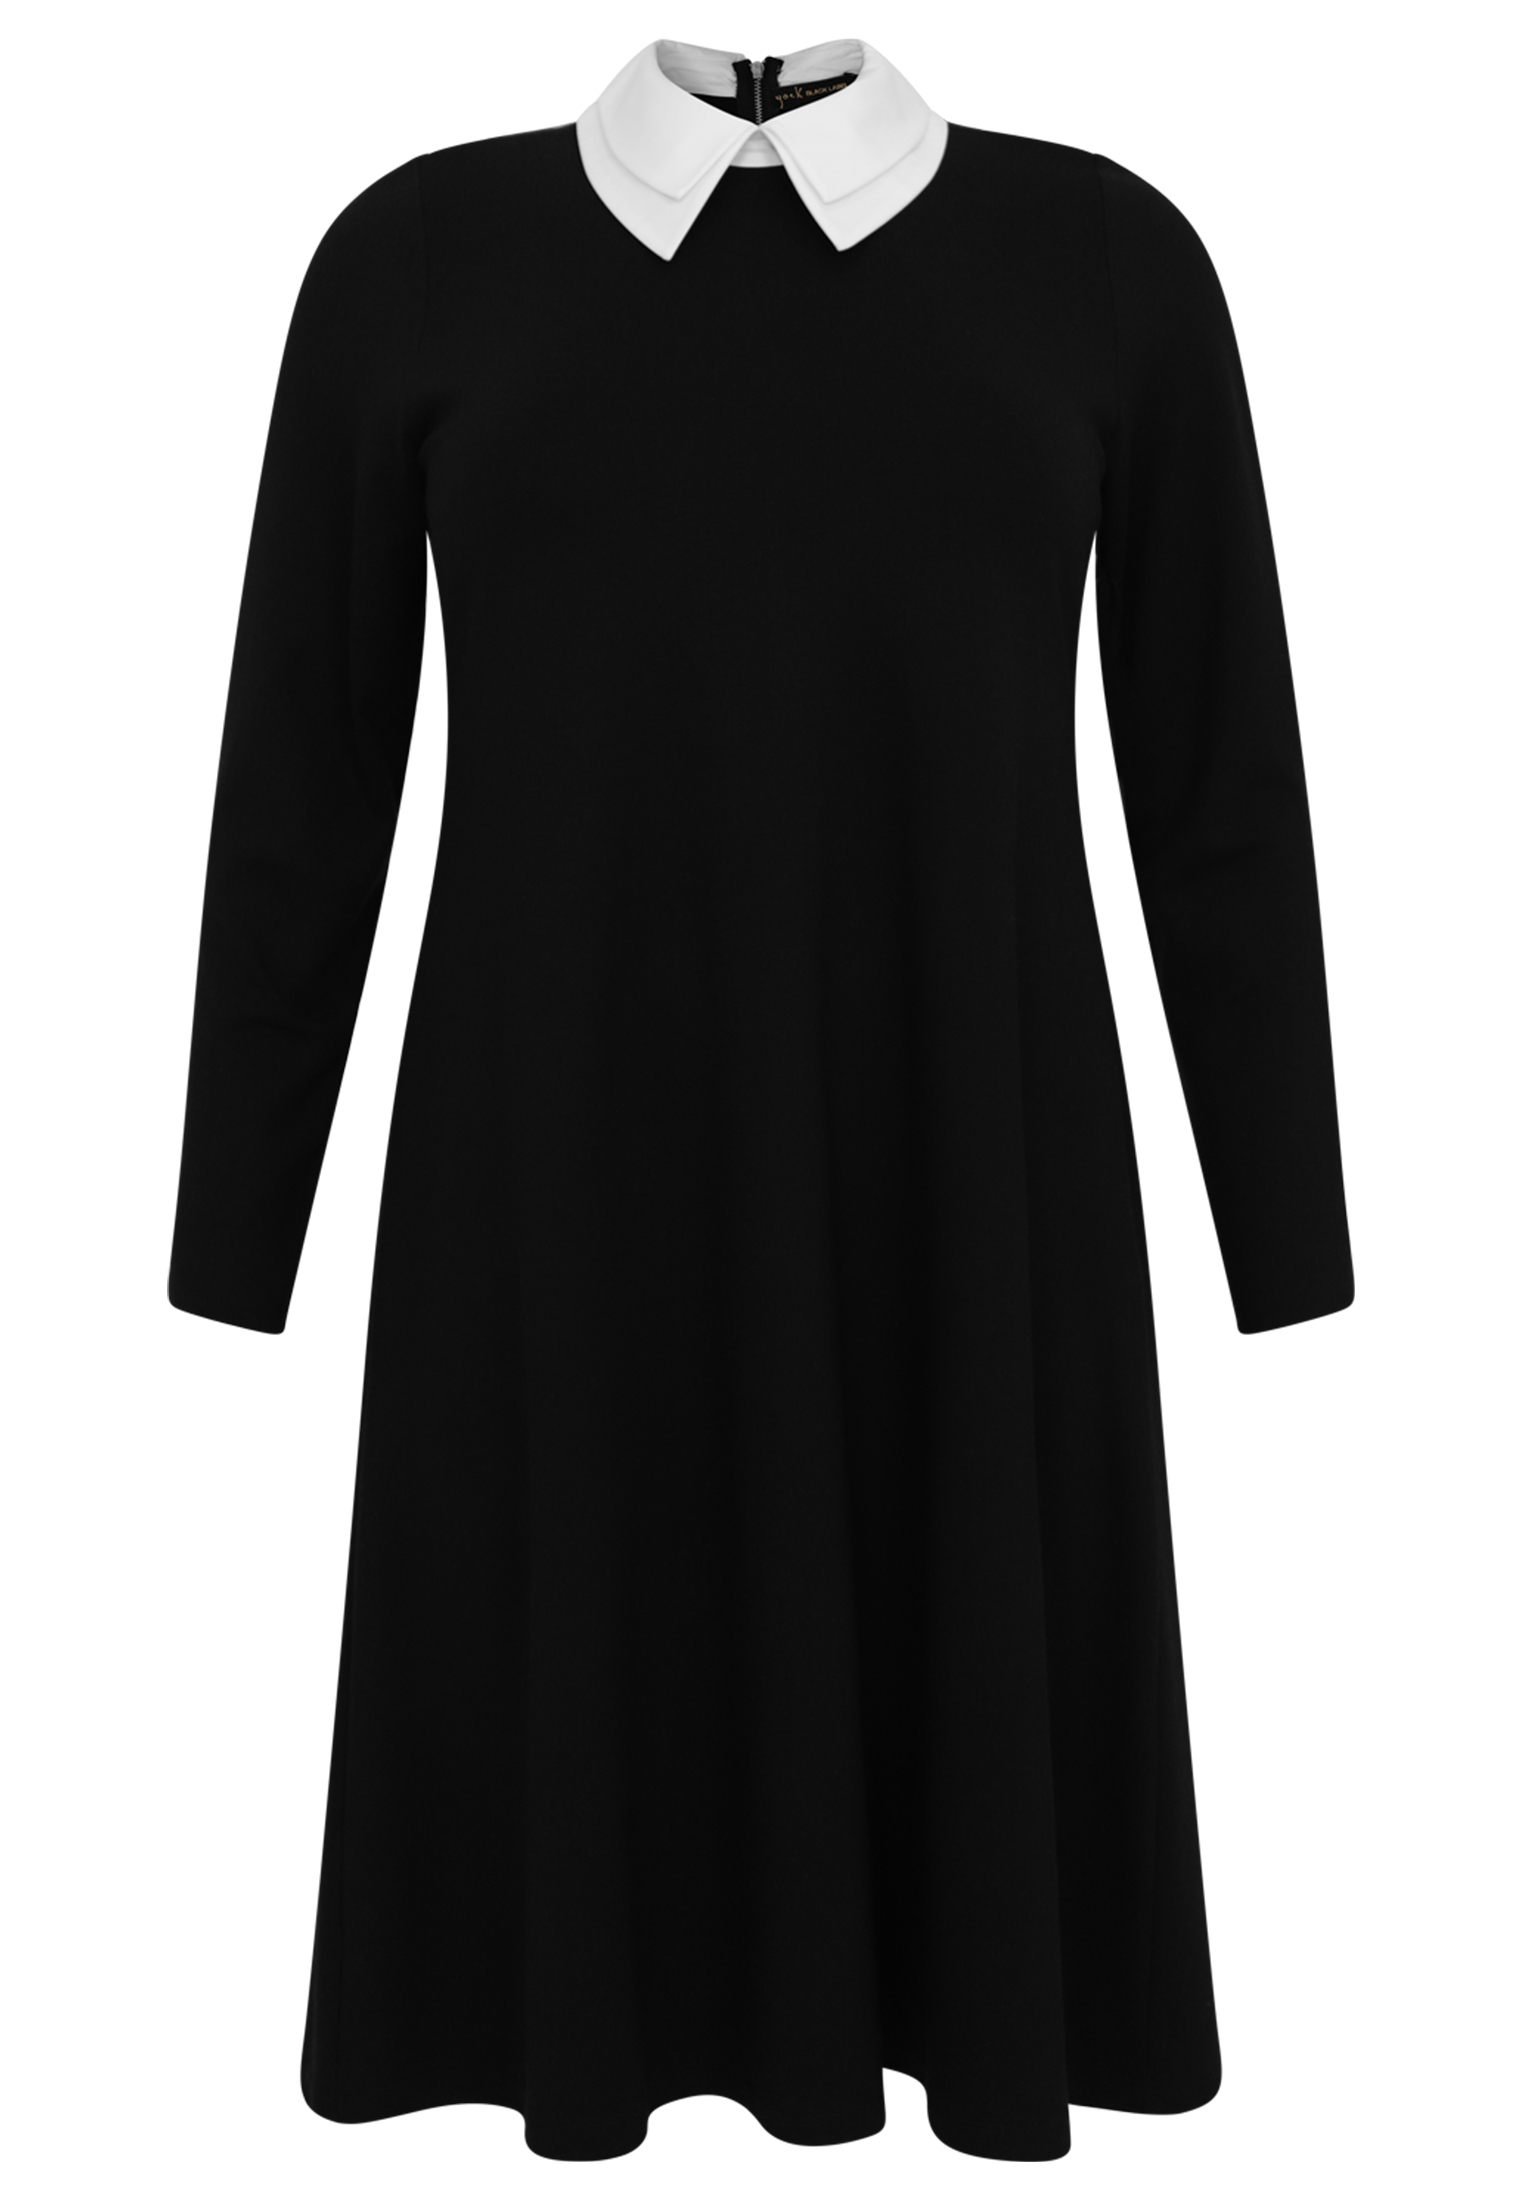 Dress contrast collar INTERLOCK - black 